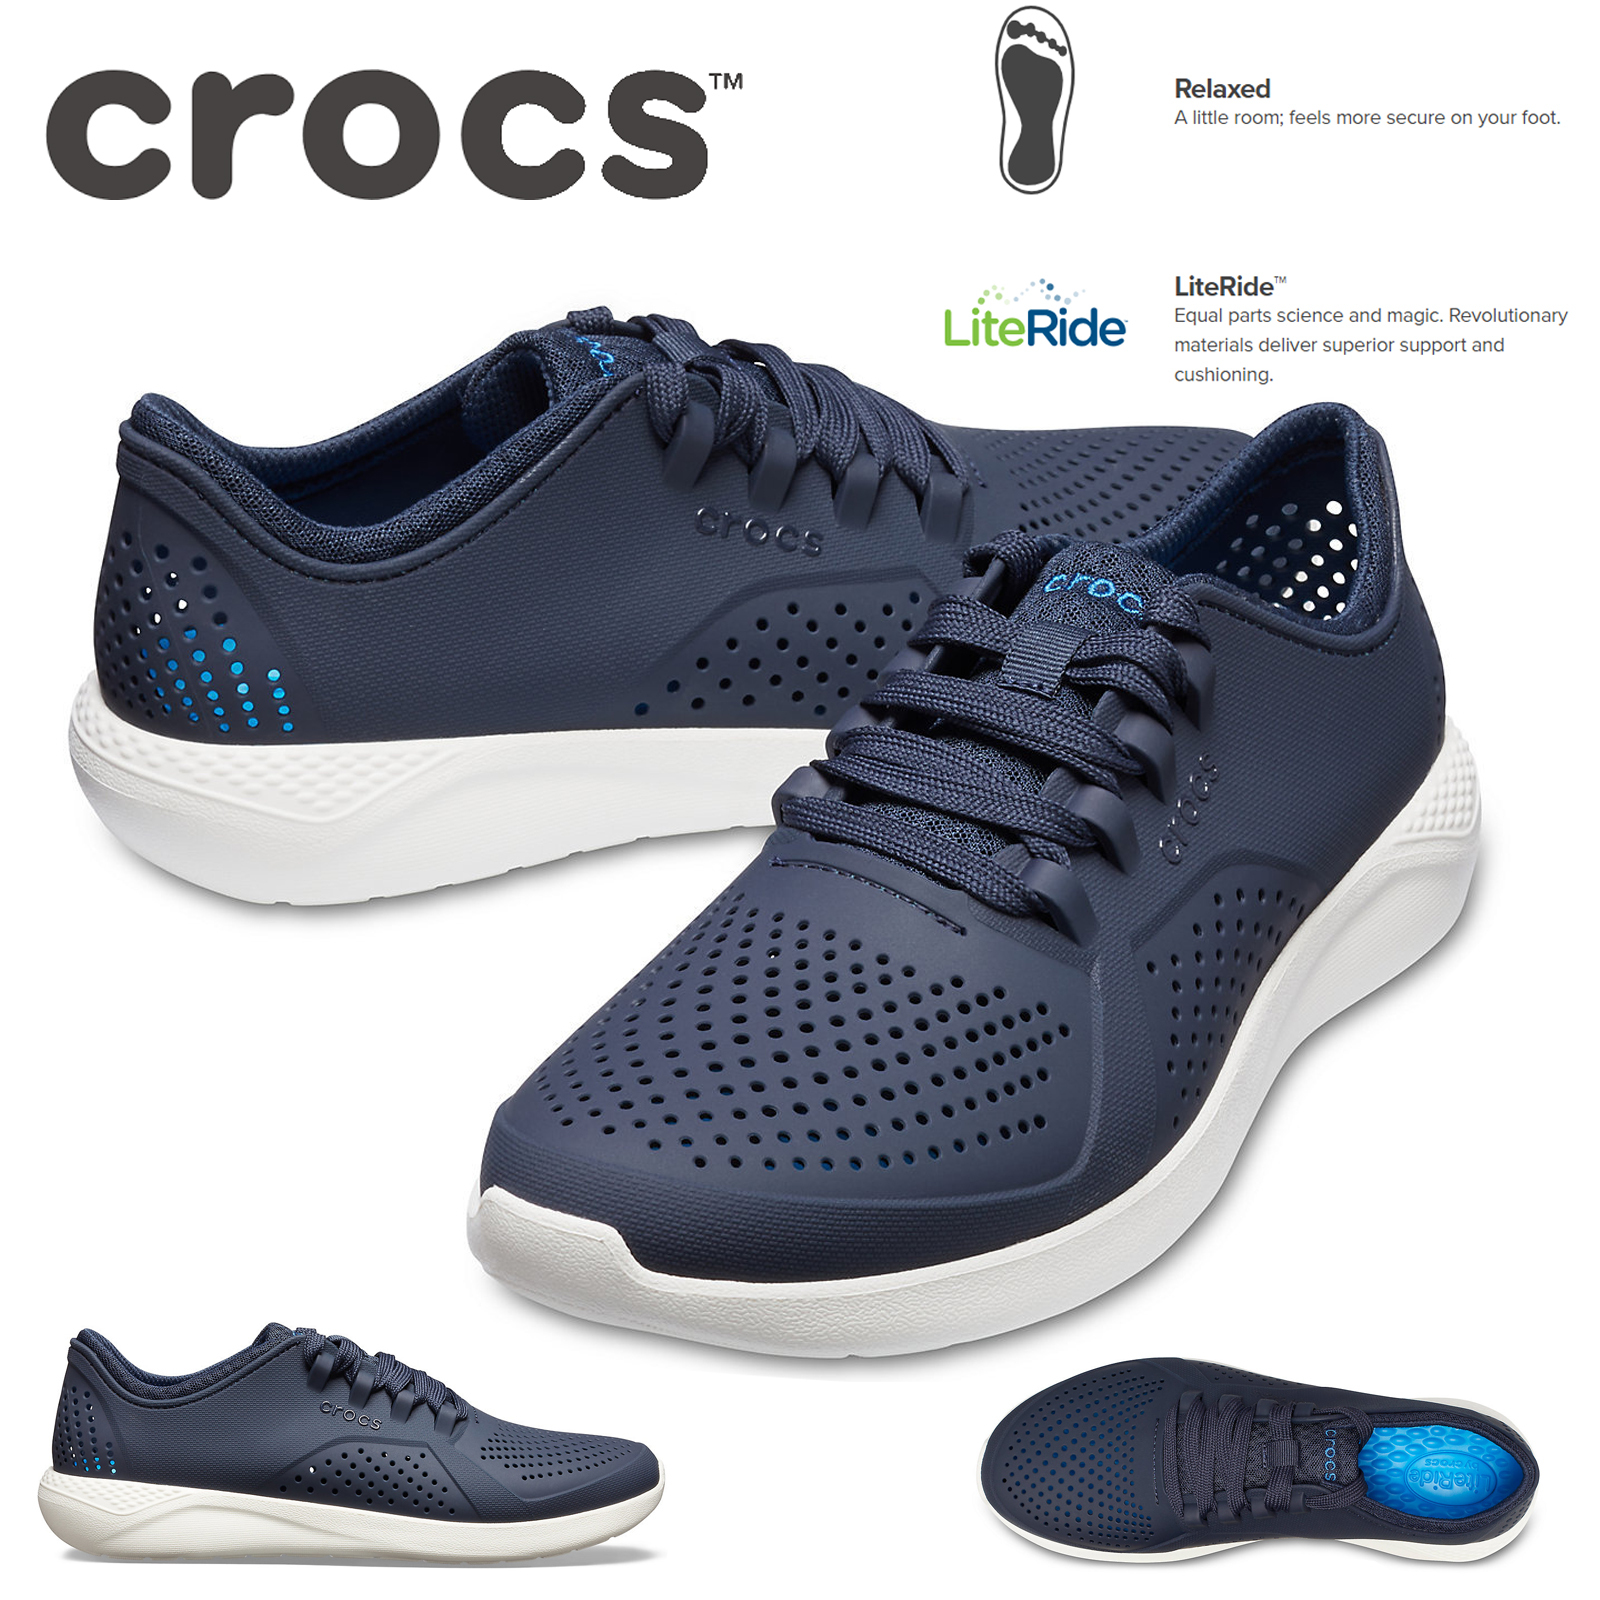 Crocs,Mens LiteRide Pacer Sneakers Shoes Runners,- Navy/White